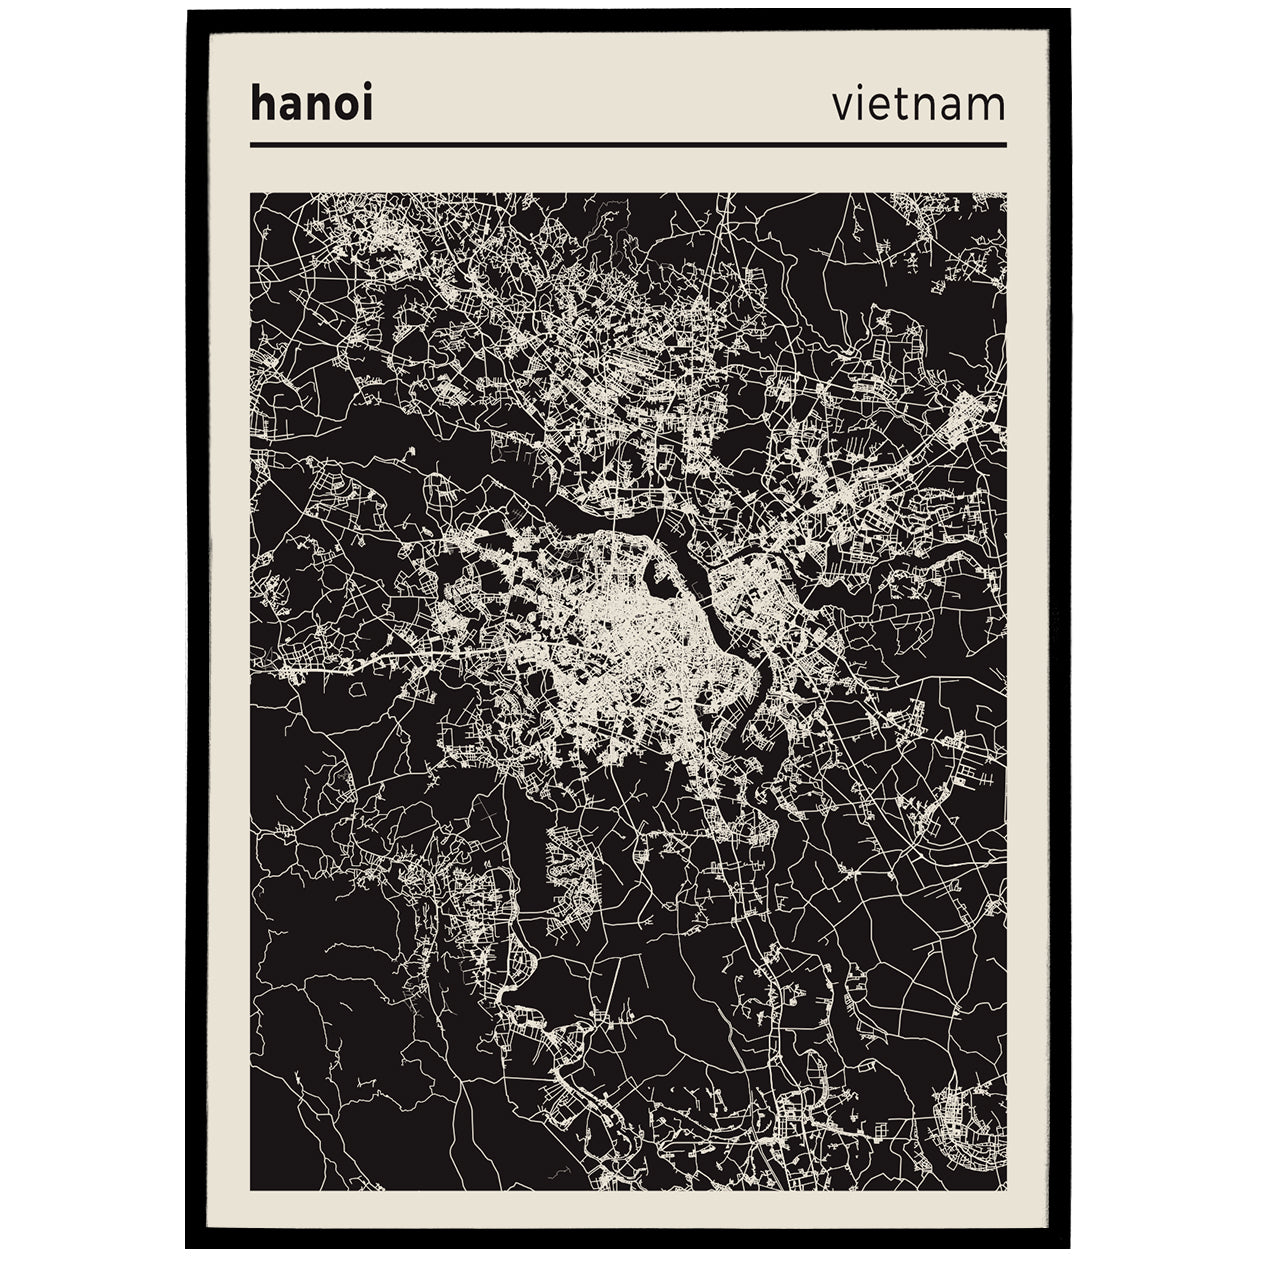 Hanoi - Vietnam | Authentic City Map Poster